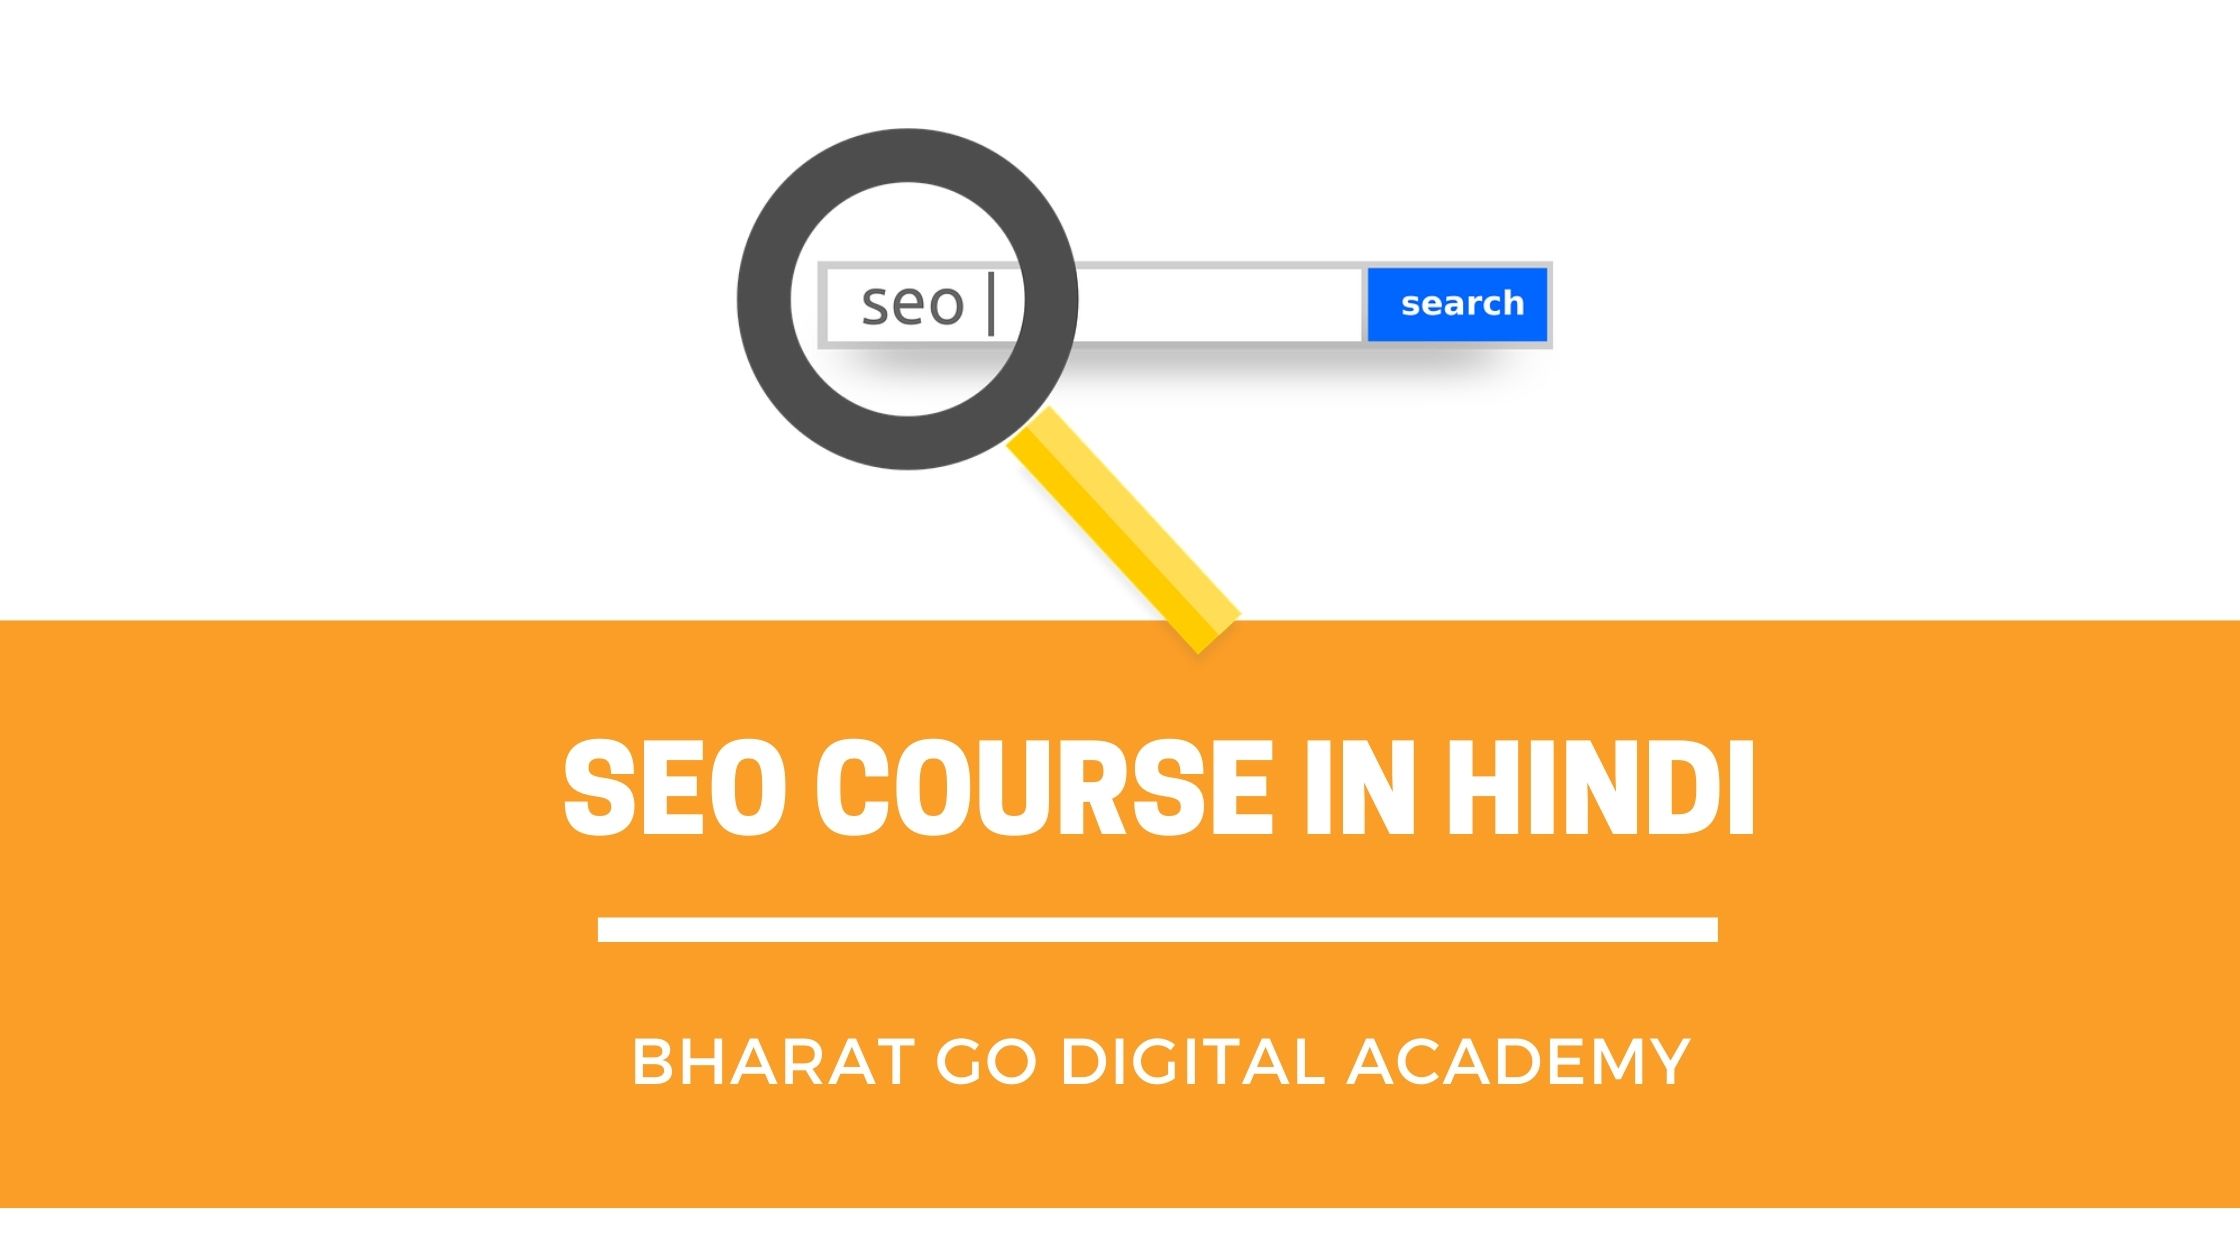 SEO Training in Hyderabad | SEO Course & Training Institute in Hyderabad